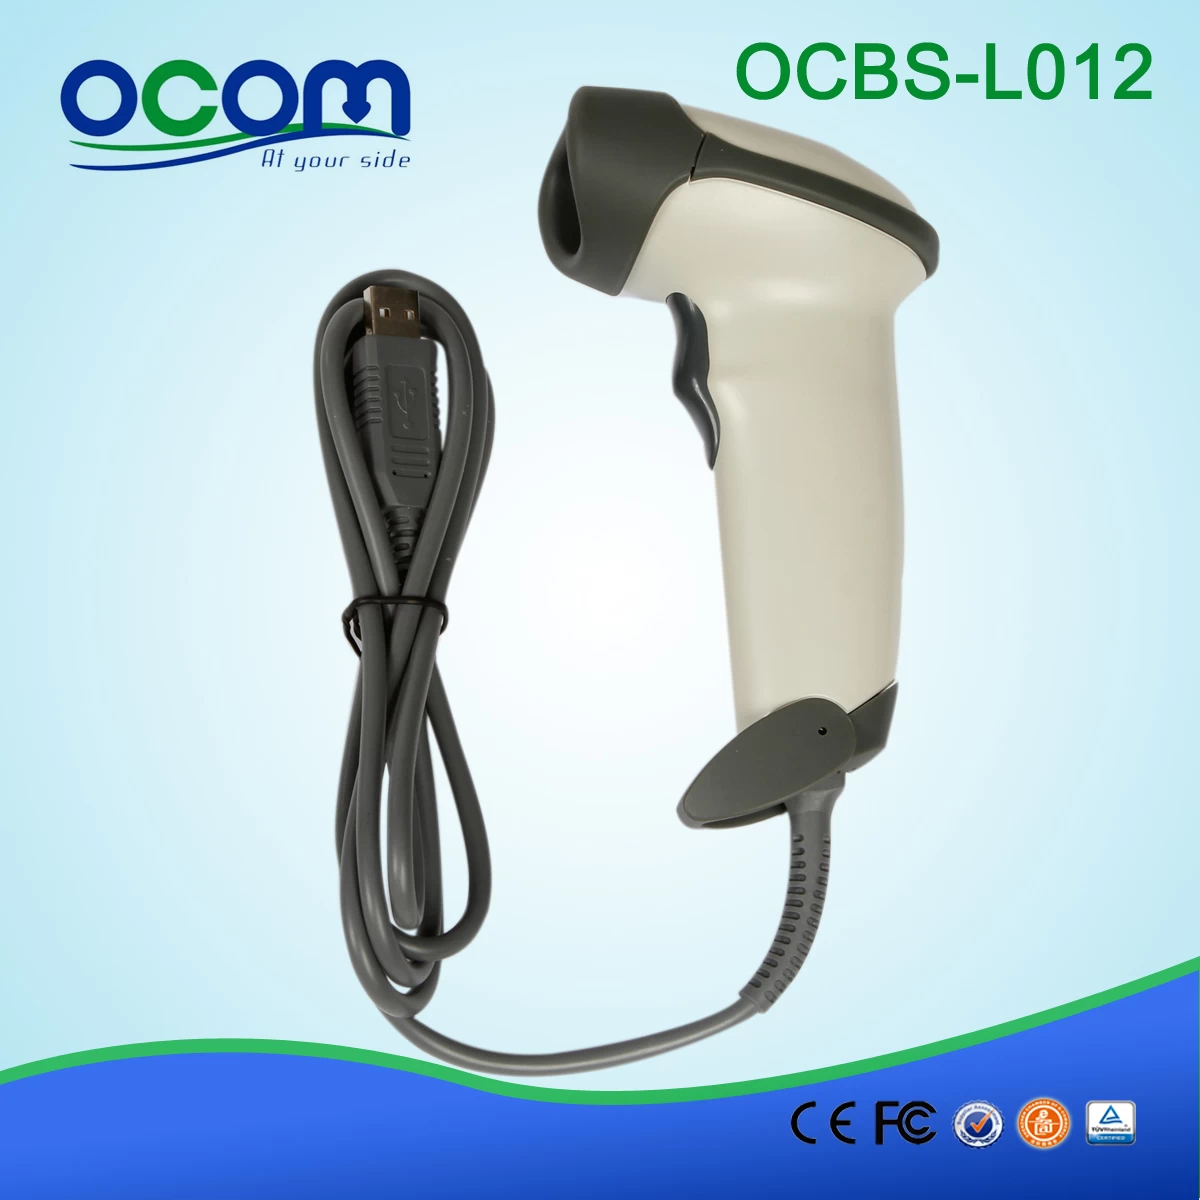 (OCBS-L012)Handheld Laser Barcode Scanner